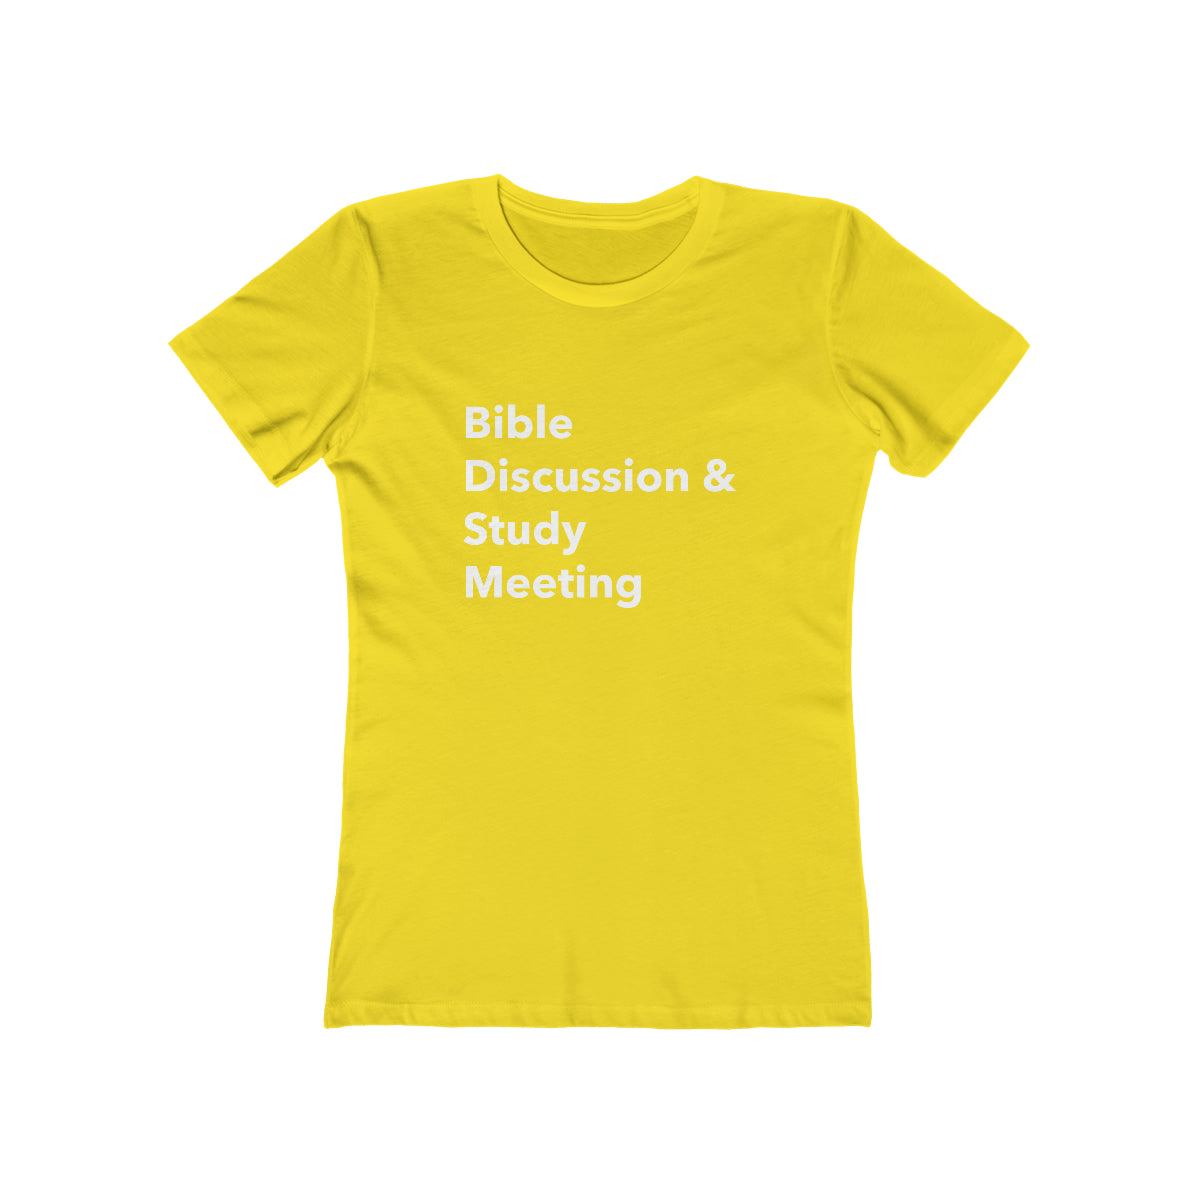 Bible Discussion & Study Meeting - Women's T-shirt